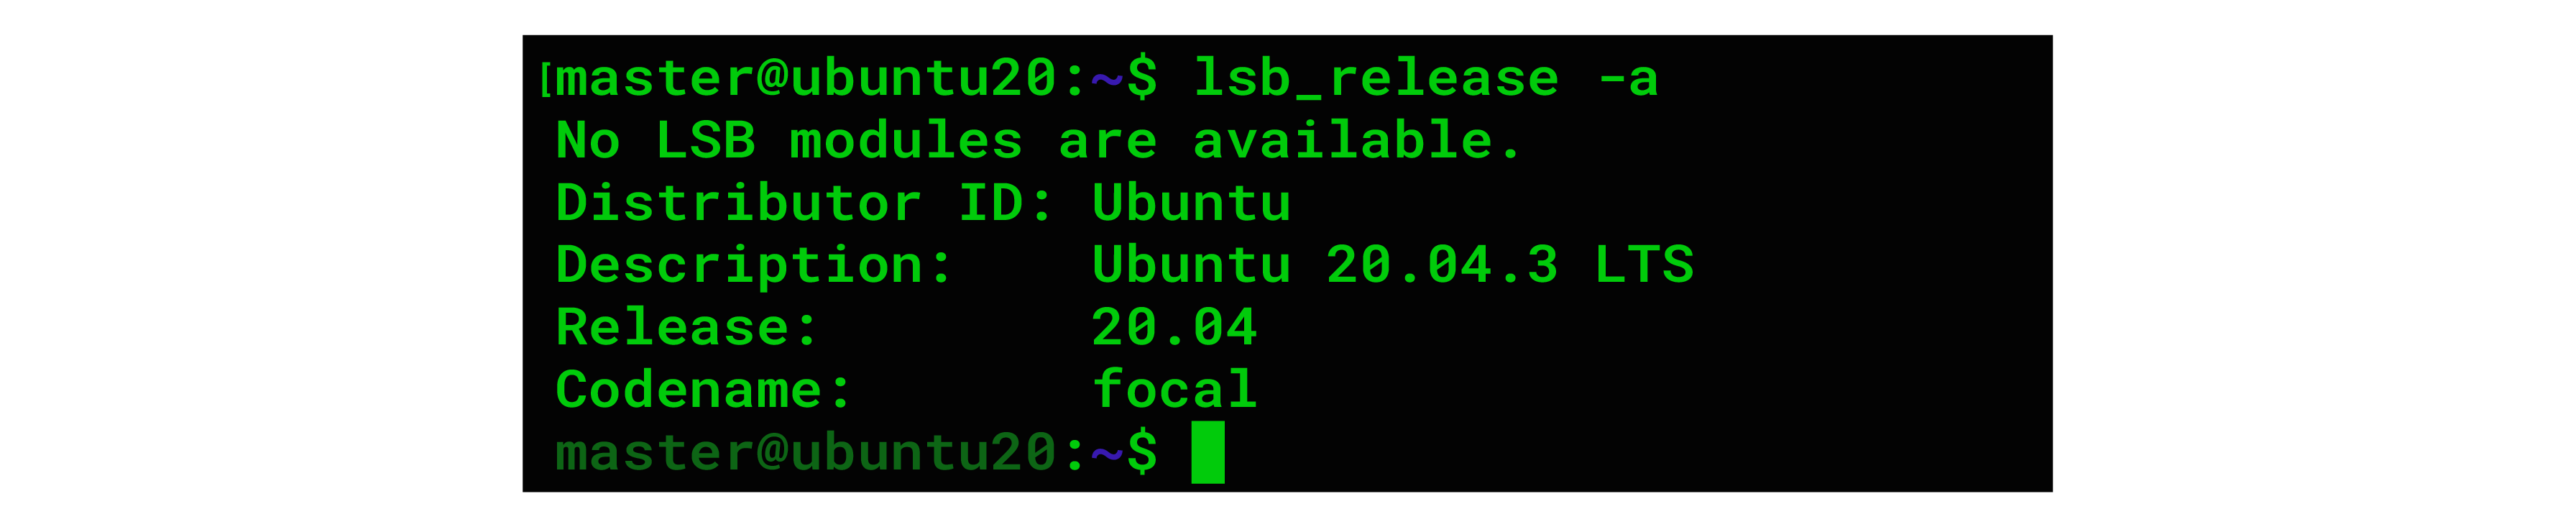 How to Install Magento 2.4 on Ubuntu 20.04